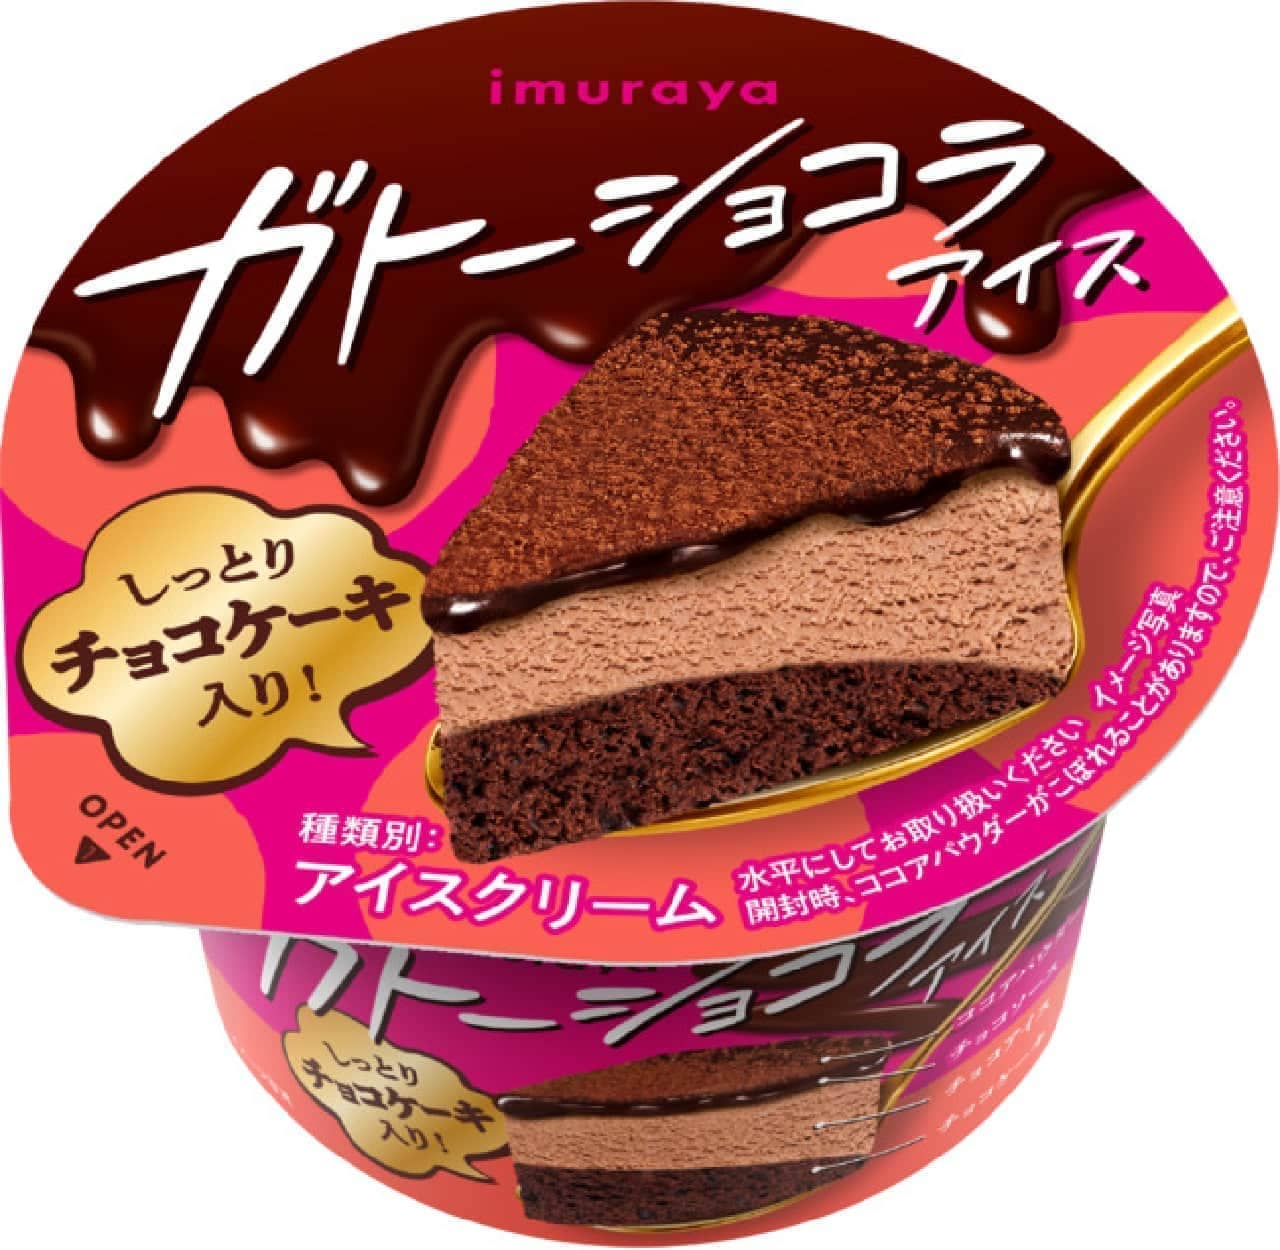 Imuraya "Gateau Chocolate Ice"